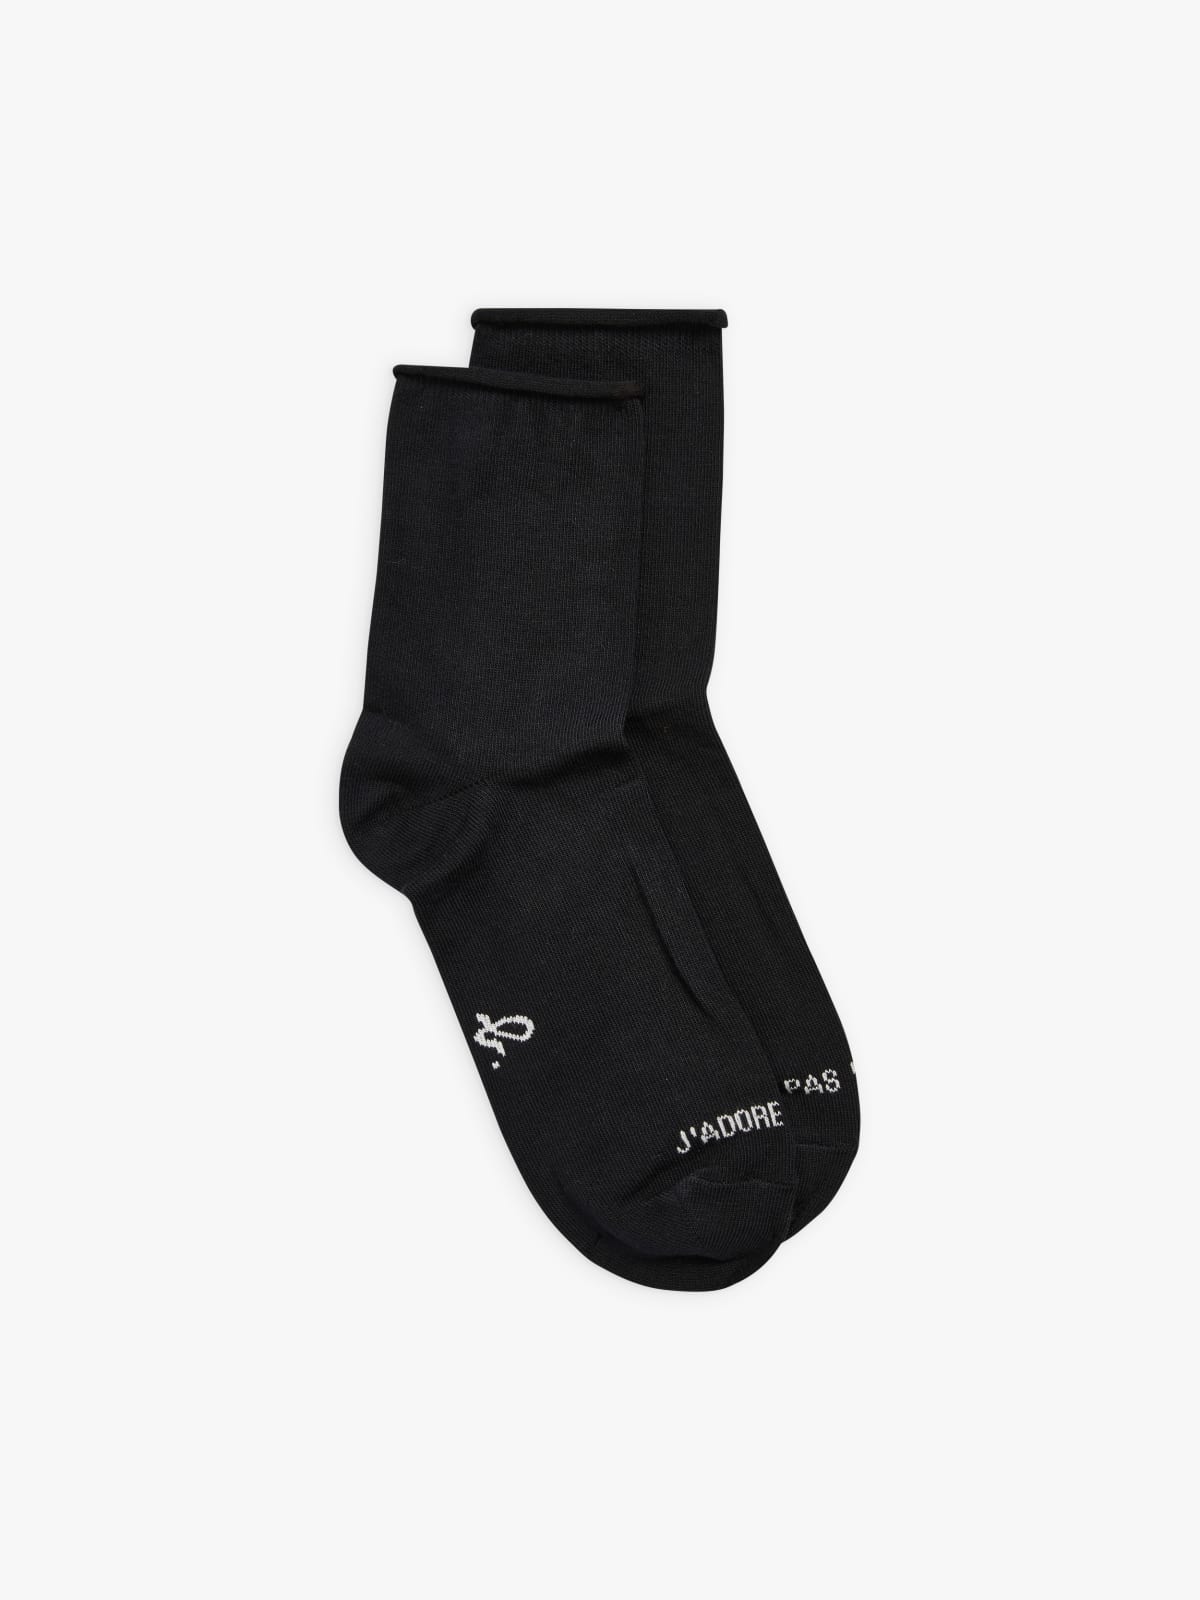 black cotton La Nuit socks